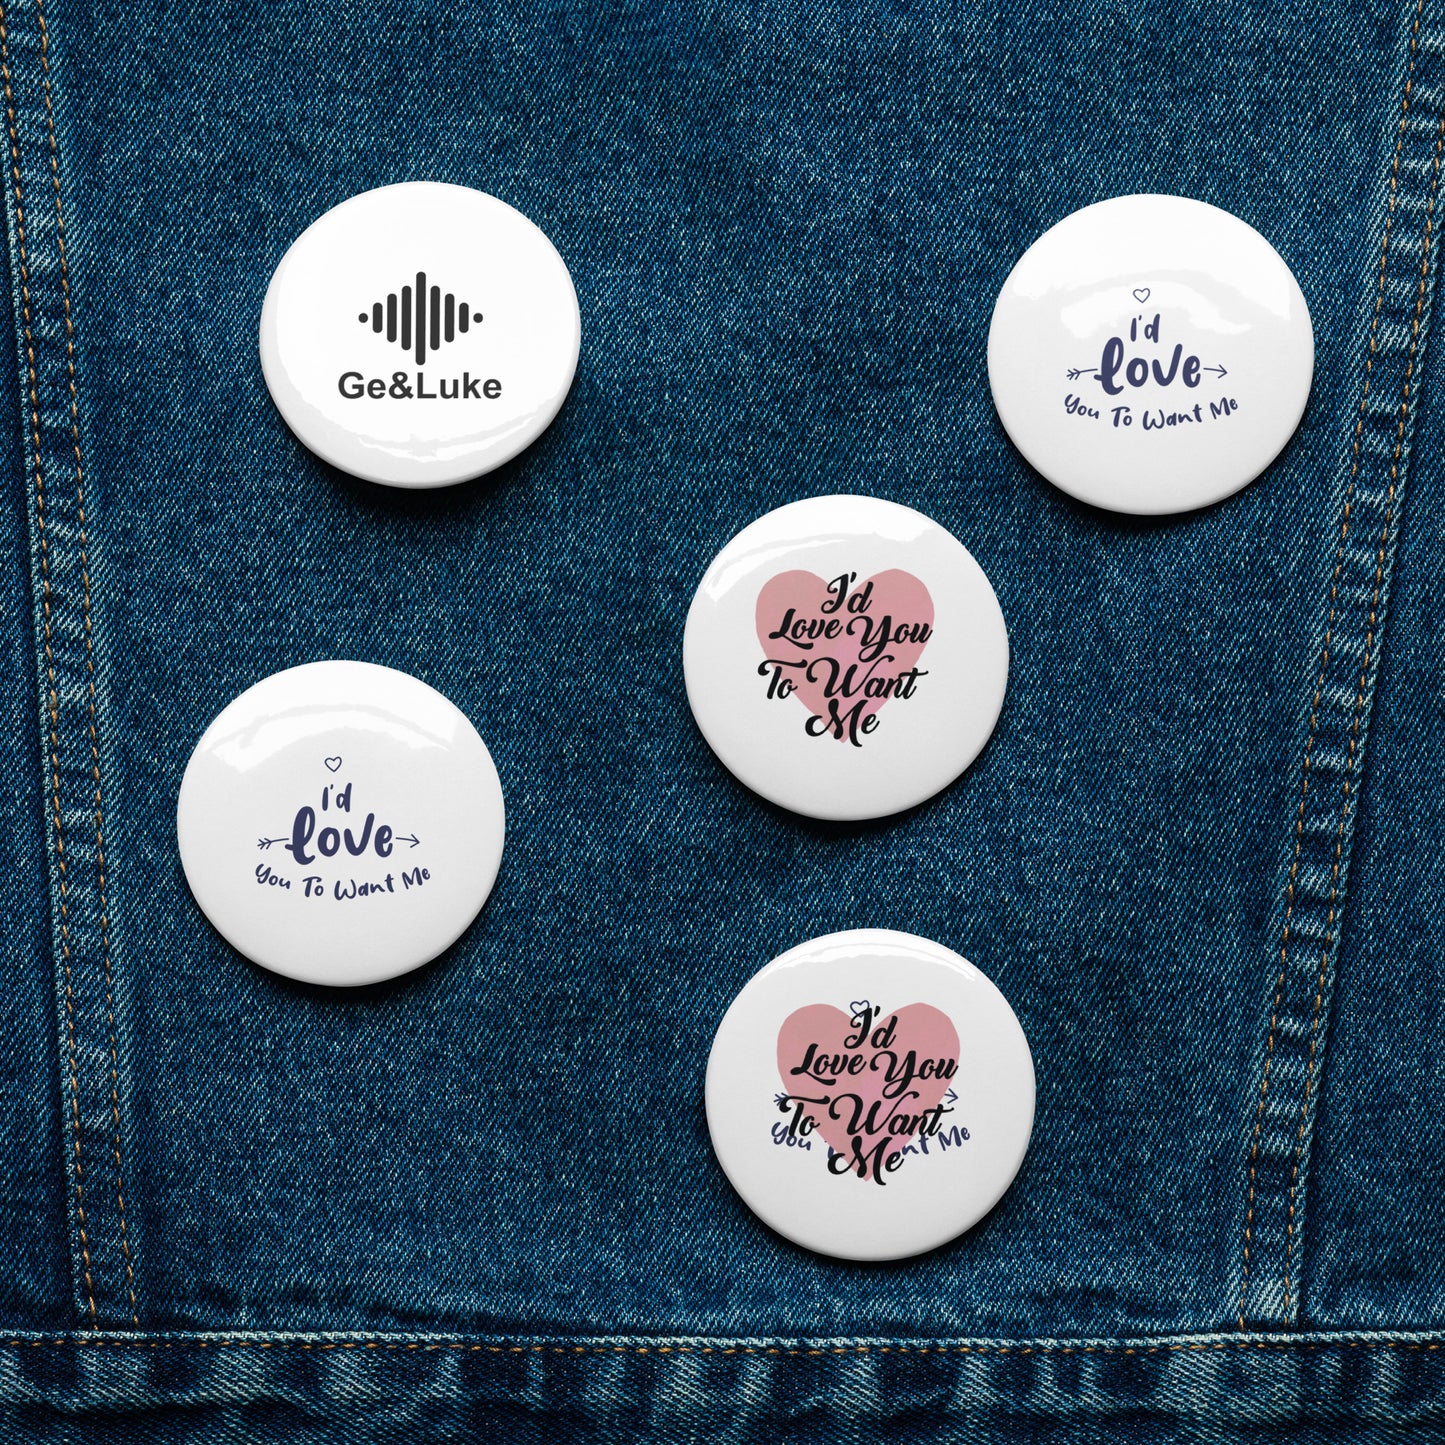 Set of pin buttons (1x Ge & Luke Logo / 2x I'd Love You To Want Me (Poetic Design) / 2x I'd Love You To Want Me (Heart Design)